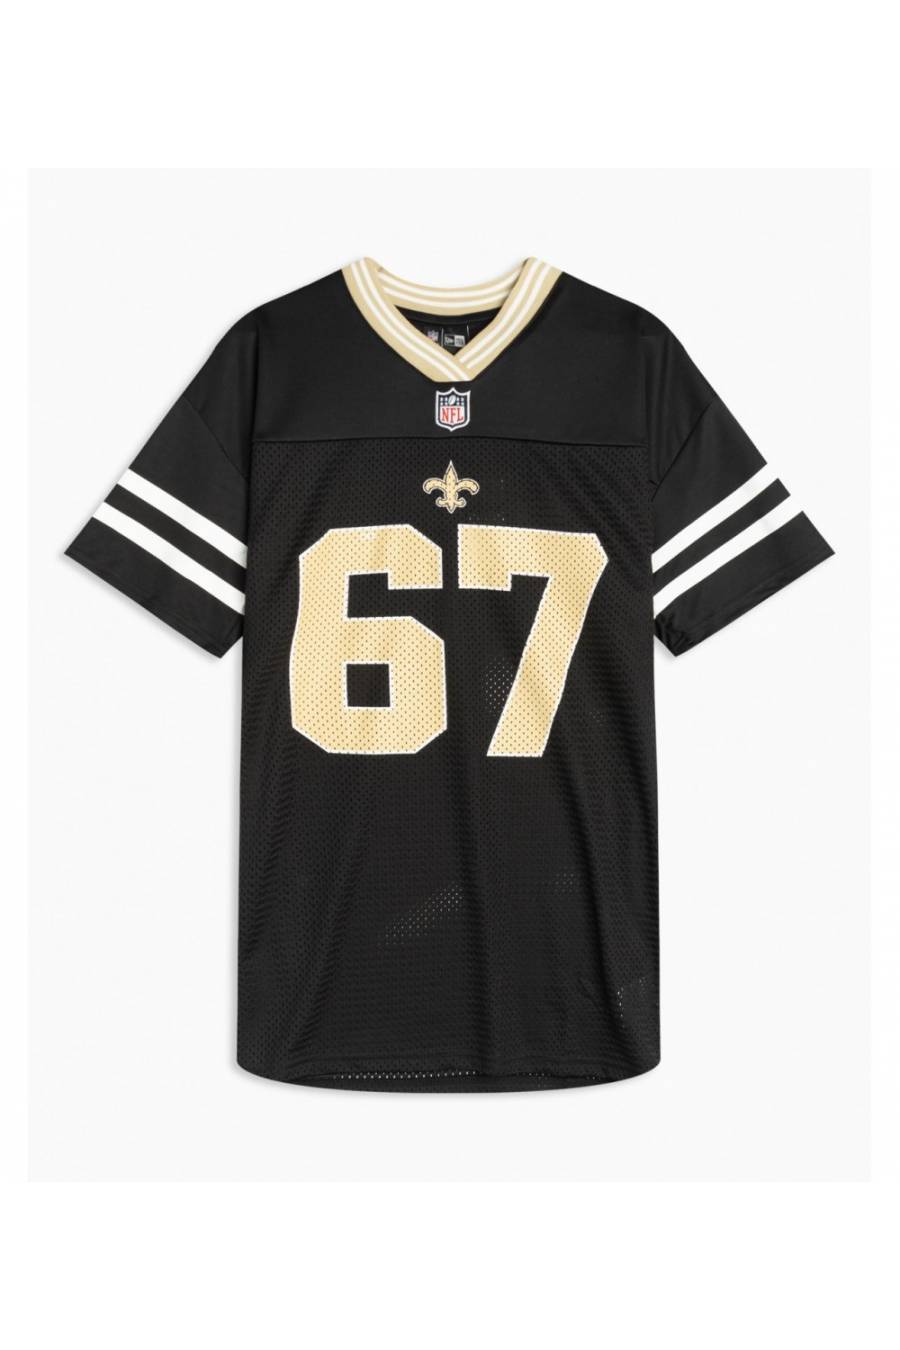 Camiseta New Era NFL Pittsburgh Steelers 12572537